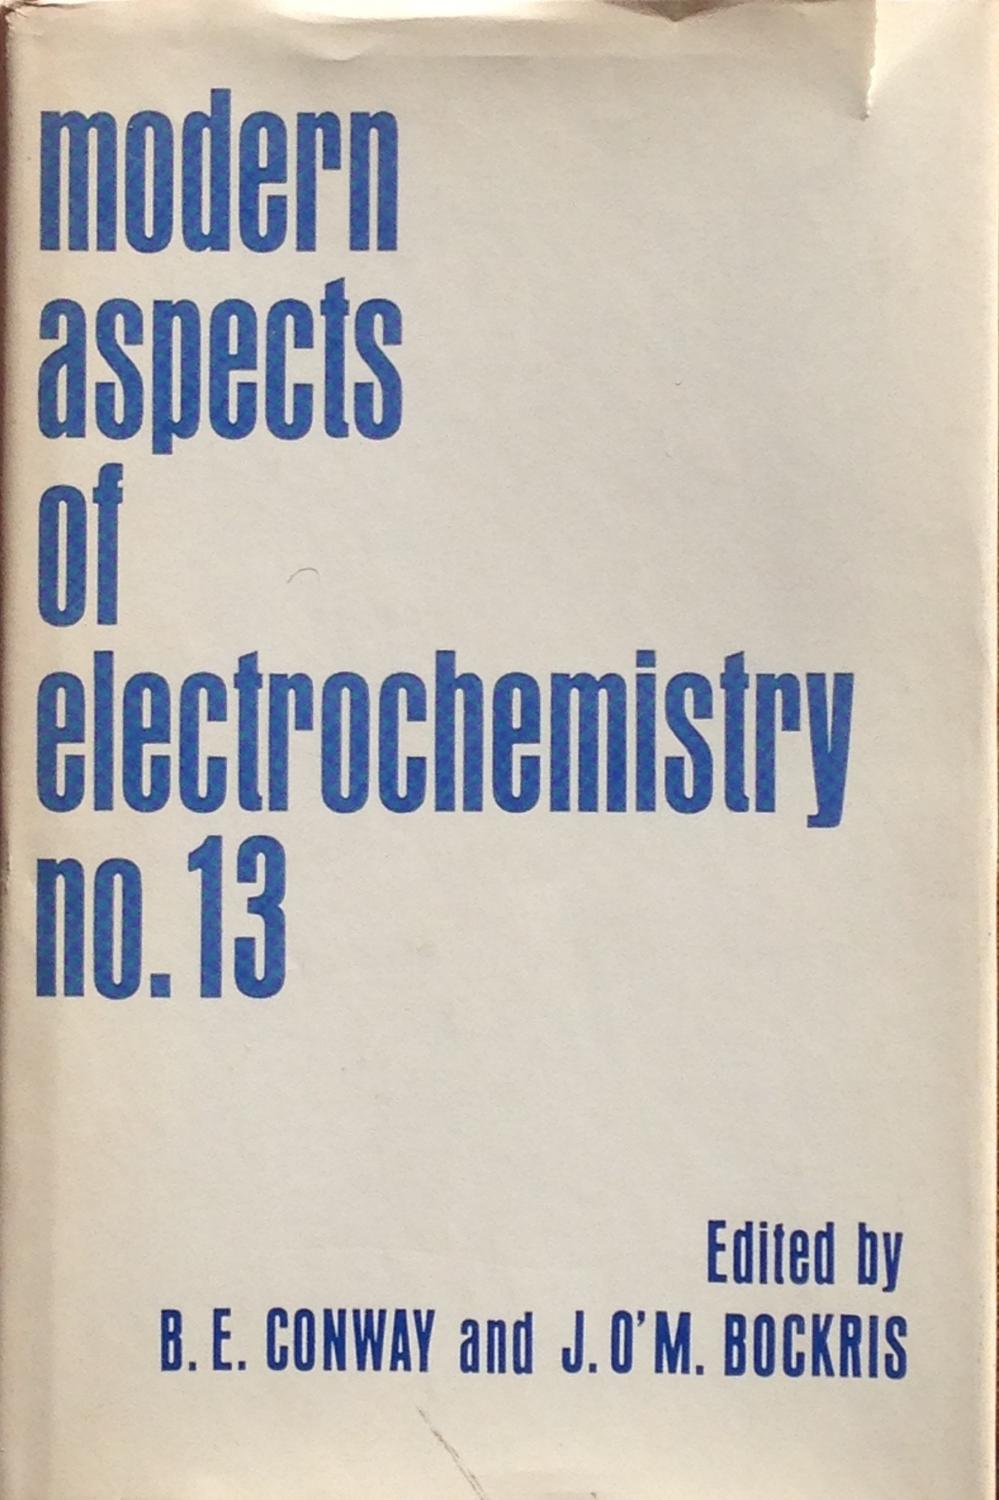 Modern aspects of electrochemistry no. 13 - Bockris, J.O. & Conway, B.E. (eds.)